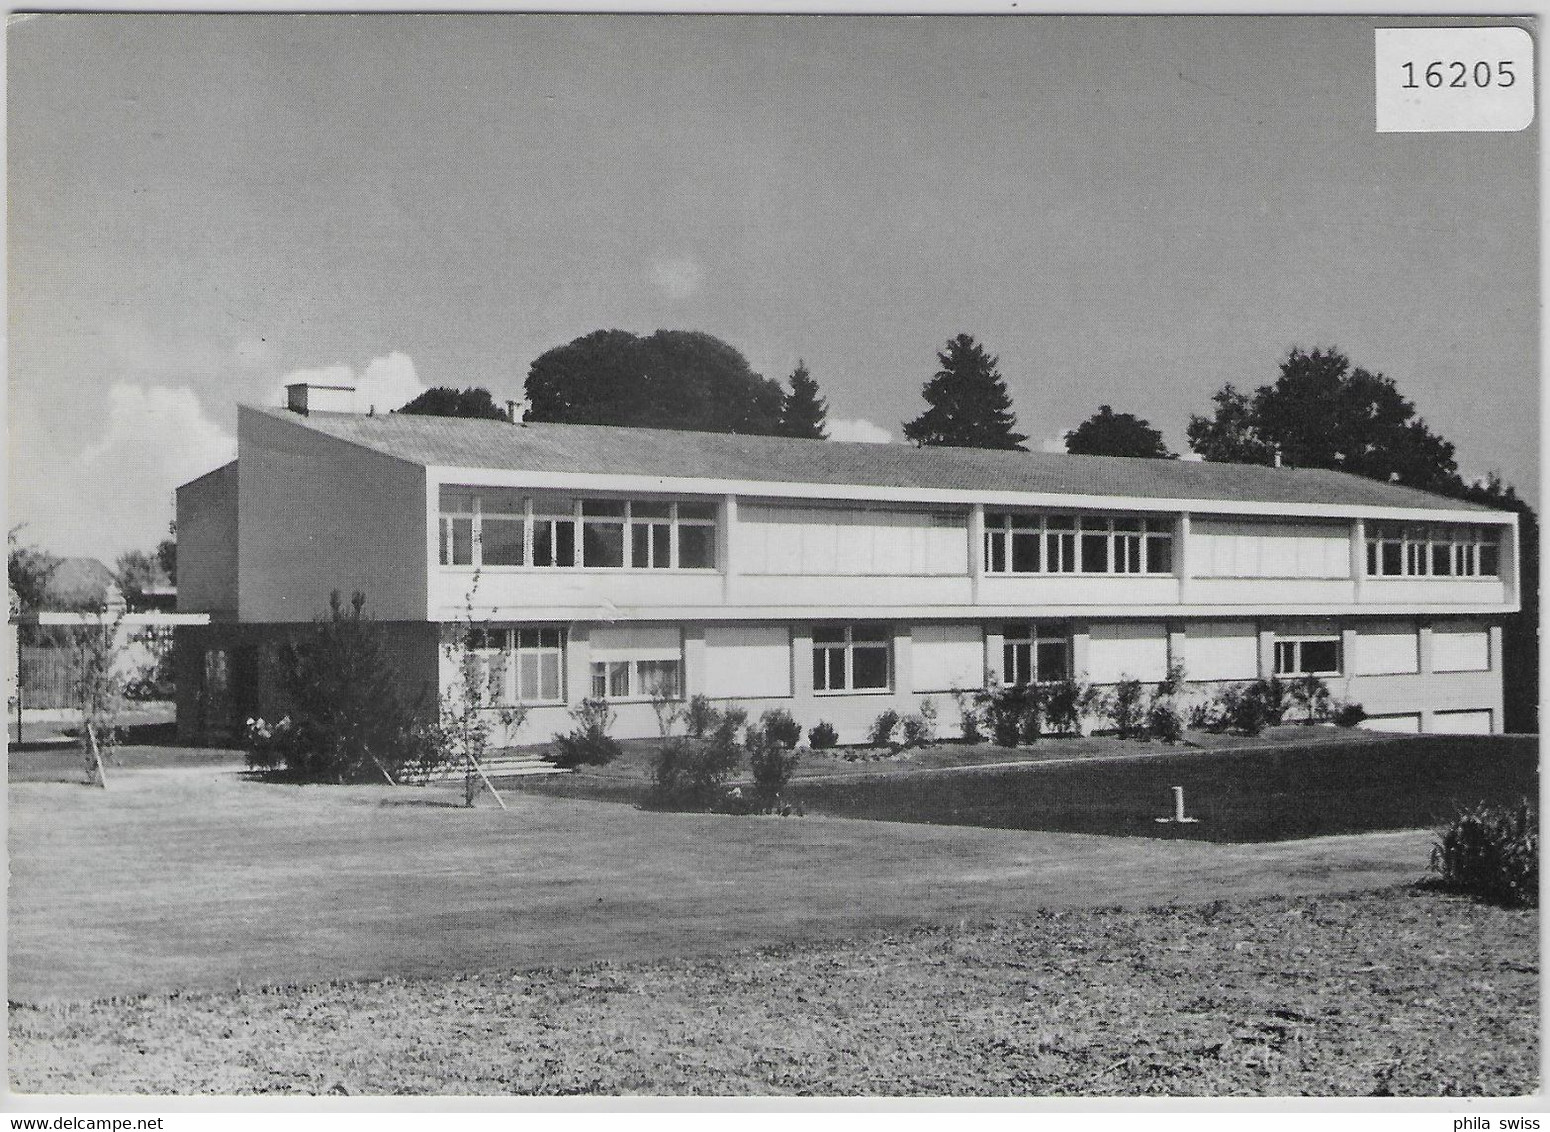 Sekundarschule Fraubrunnen Jahrhundertfeier 1960 - Fraubrunnen